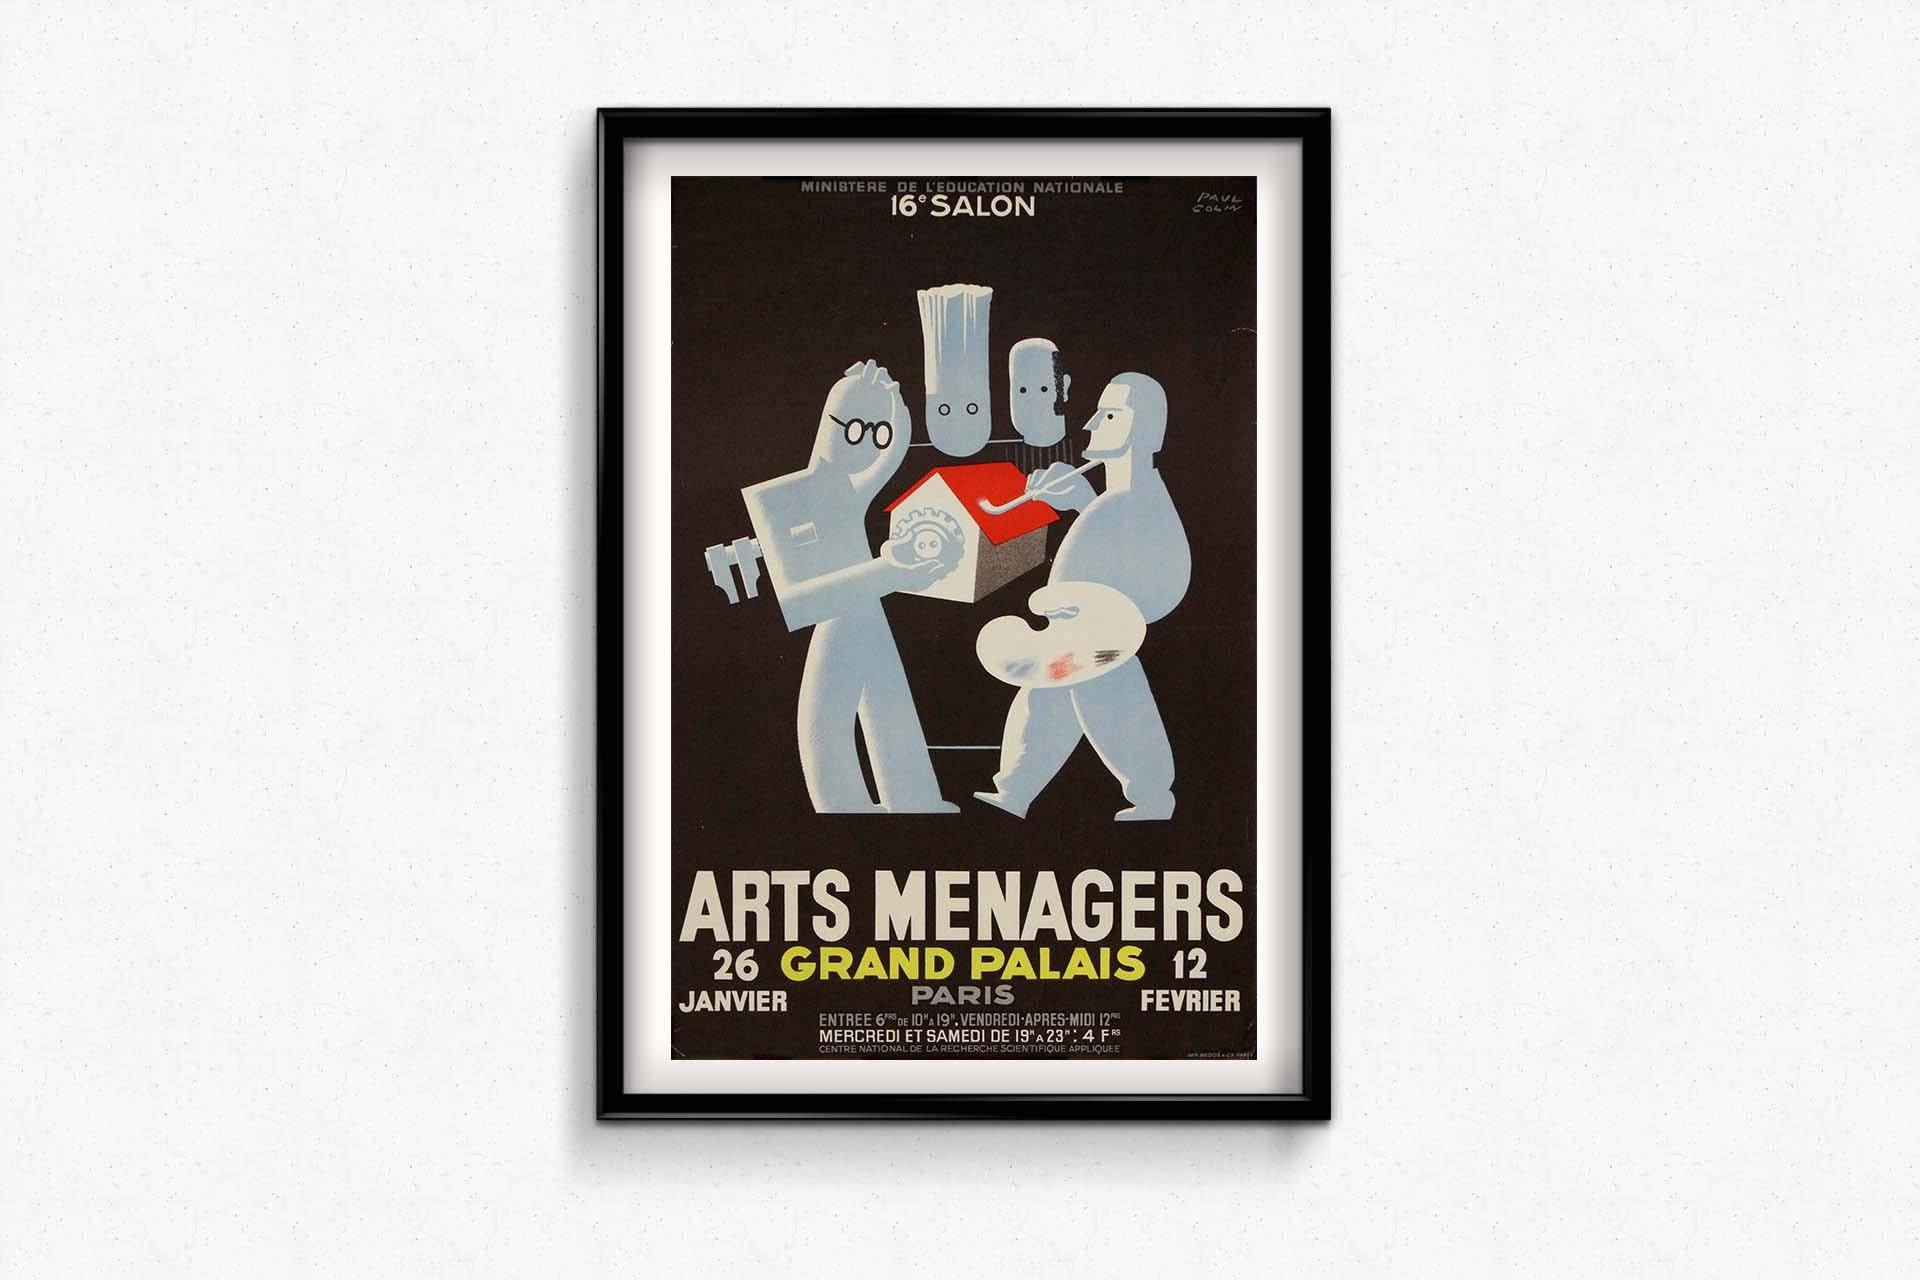 1937 Originalplakat 16. Salon des Arts Ménagers im Grand Palais - Paris (Art déco), Print, von Paul Colin